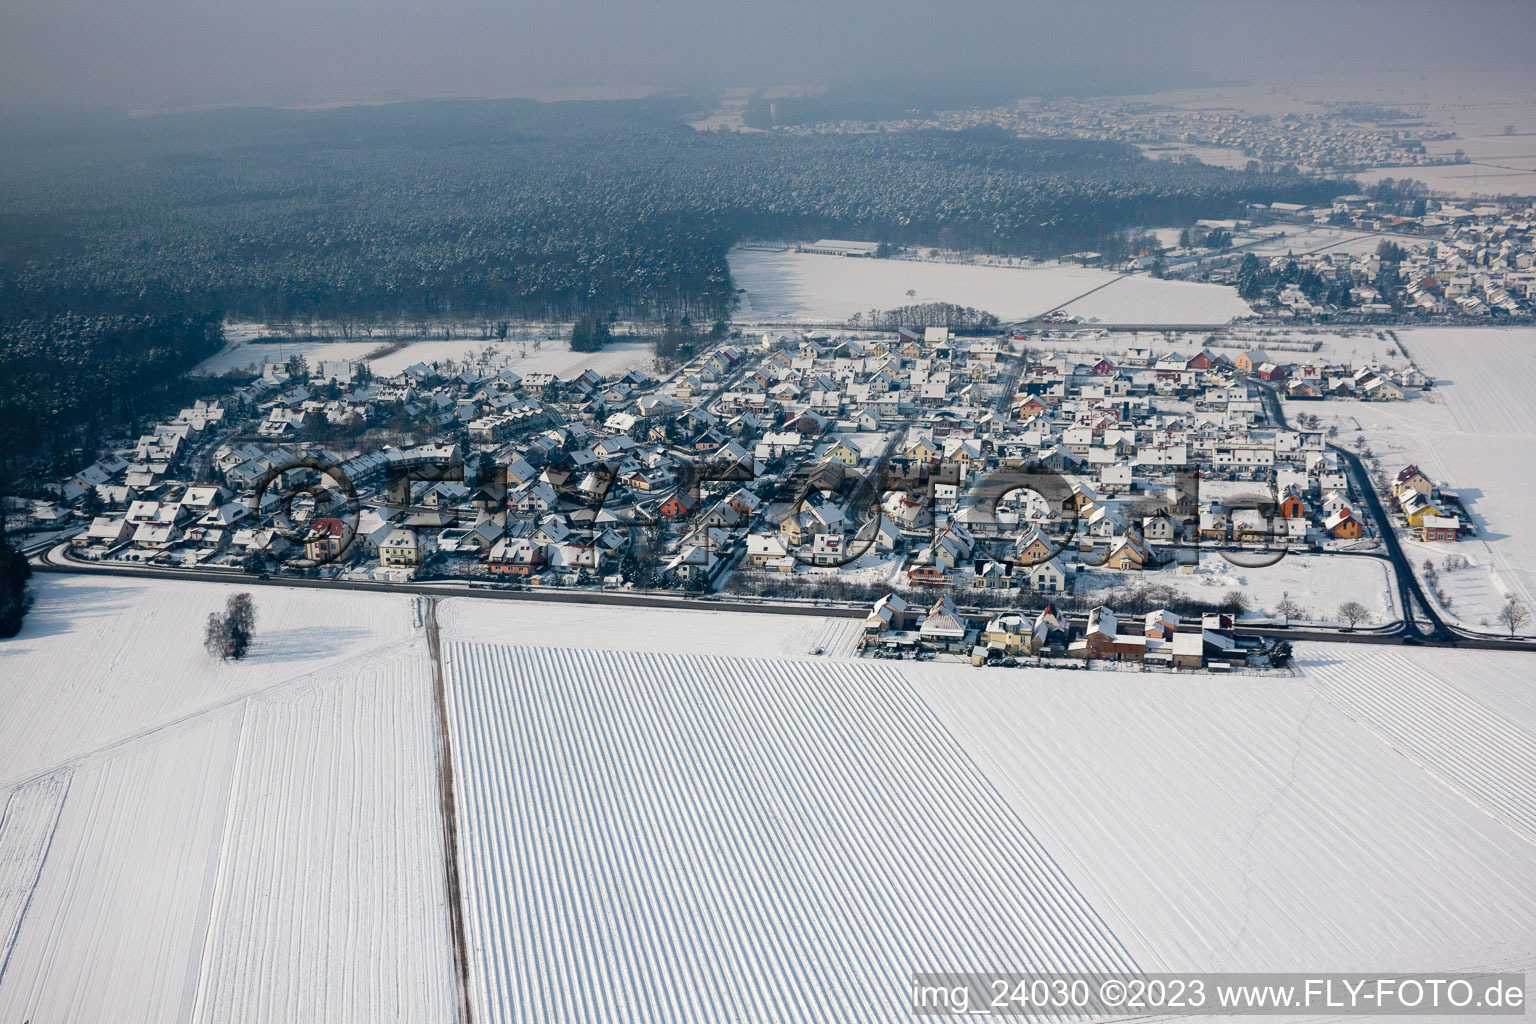 Aerial view of Rheinzabern in the state Rhineland-Palatinate, Germany